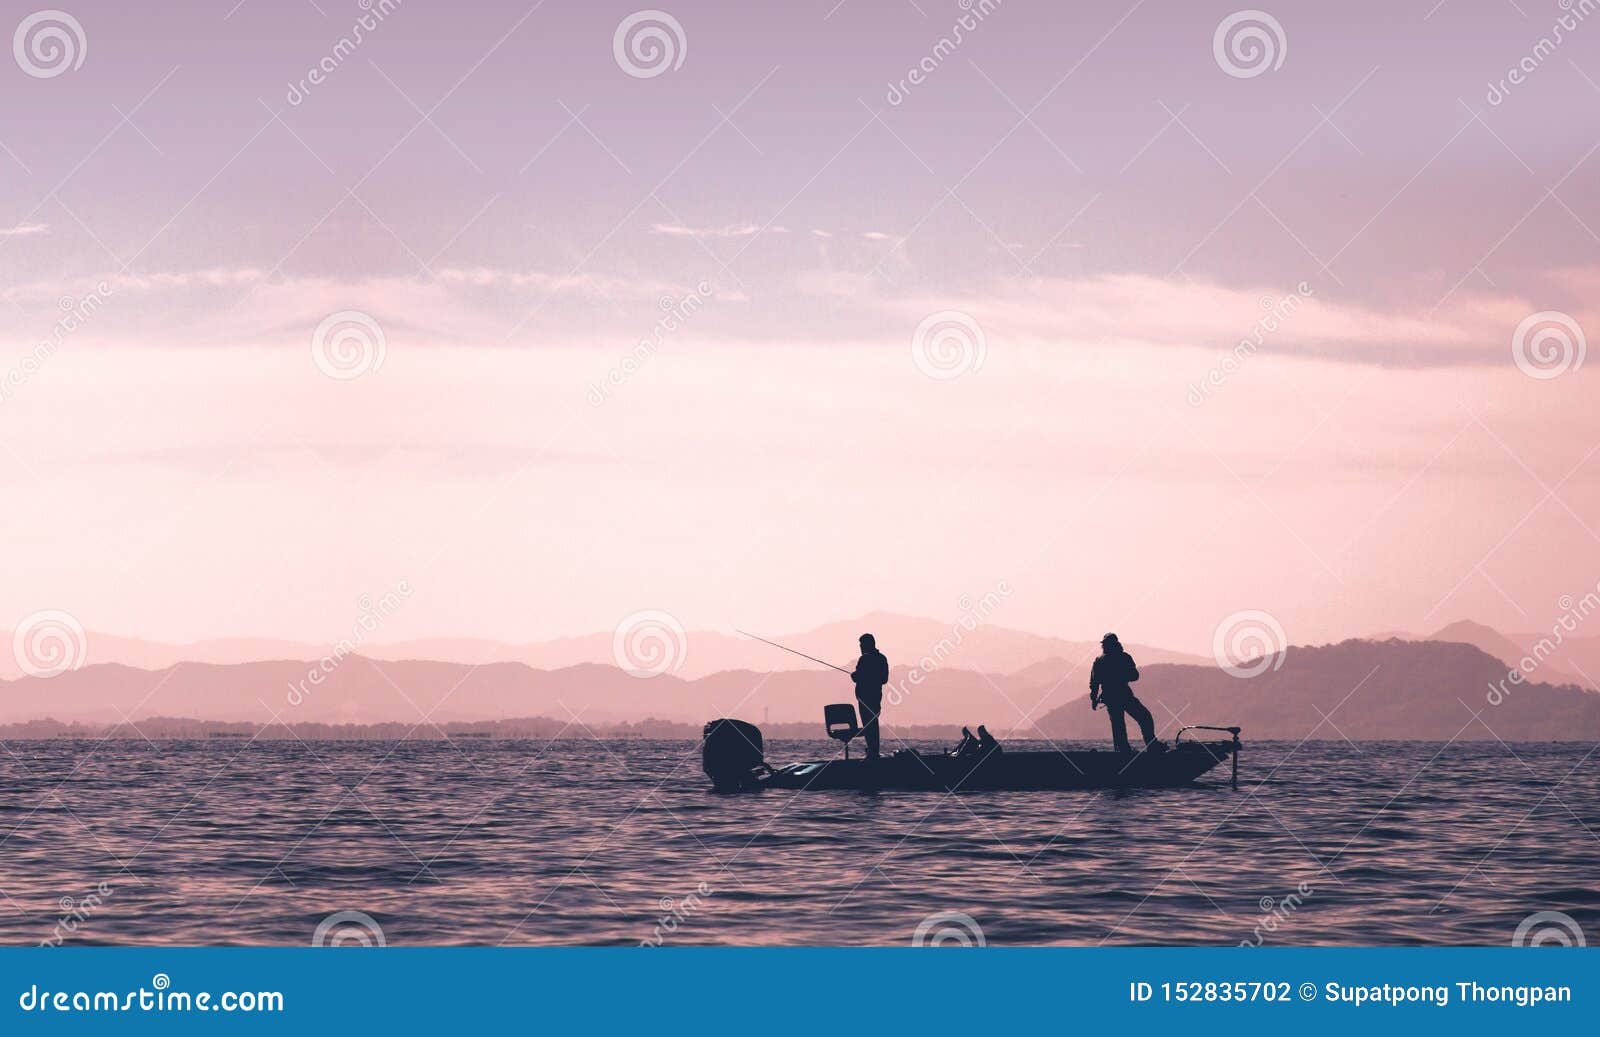 67,346 Boat Fishing People Stock Photos - Free & Royalty-Free